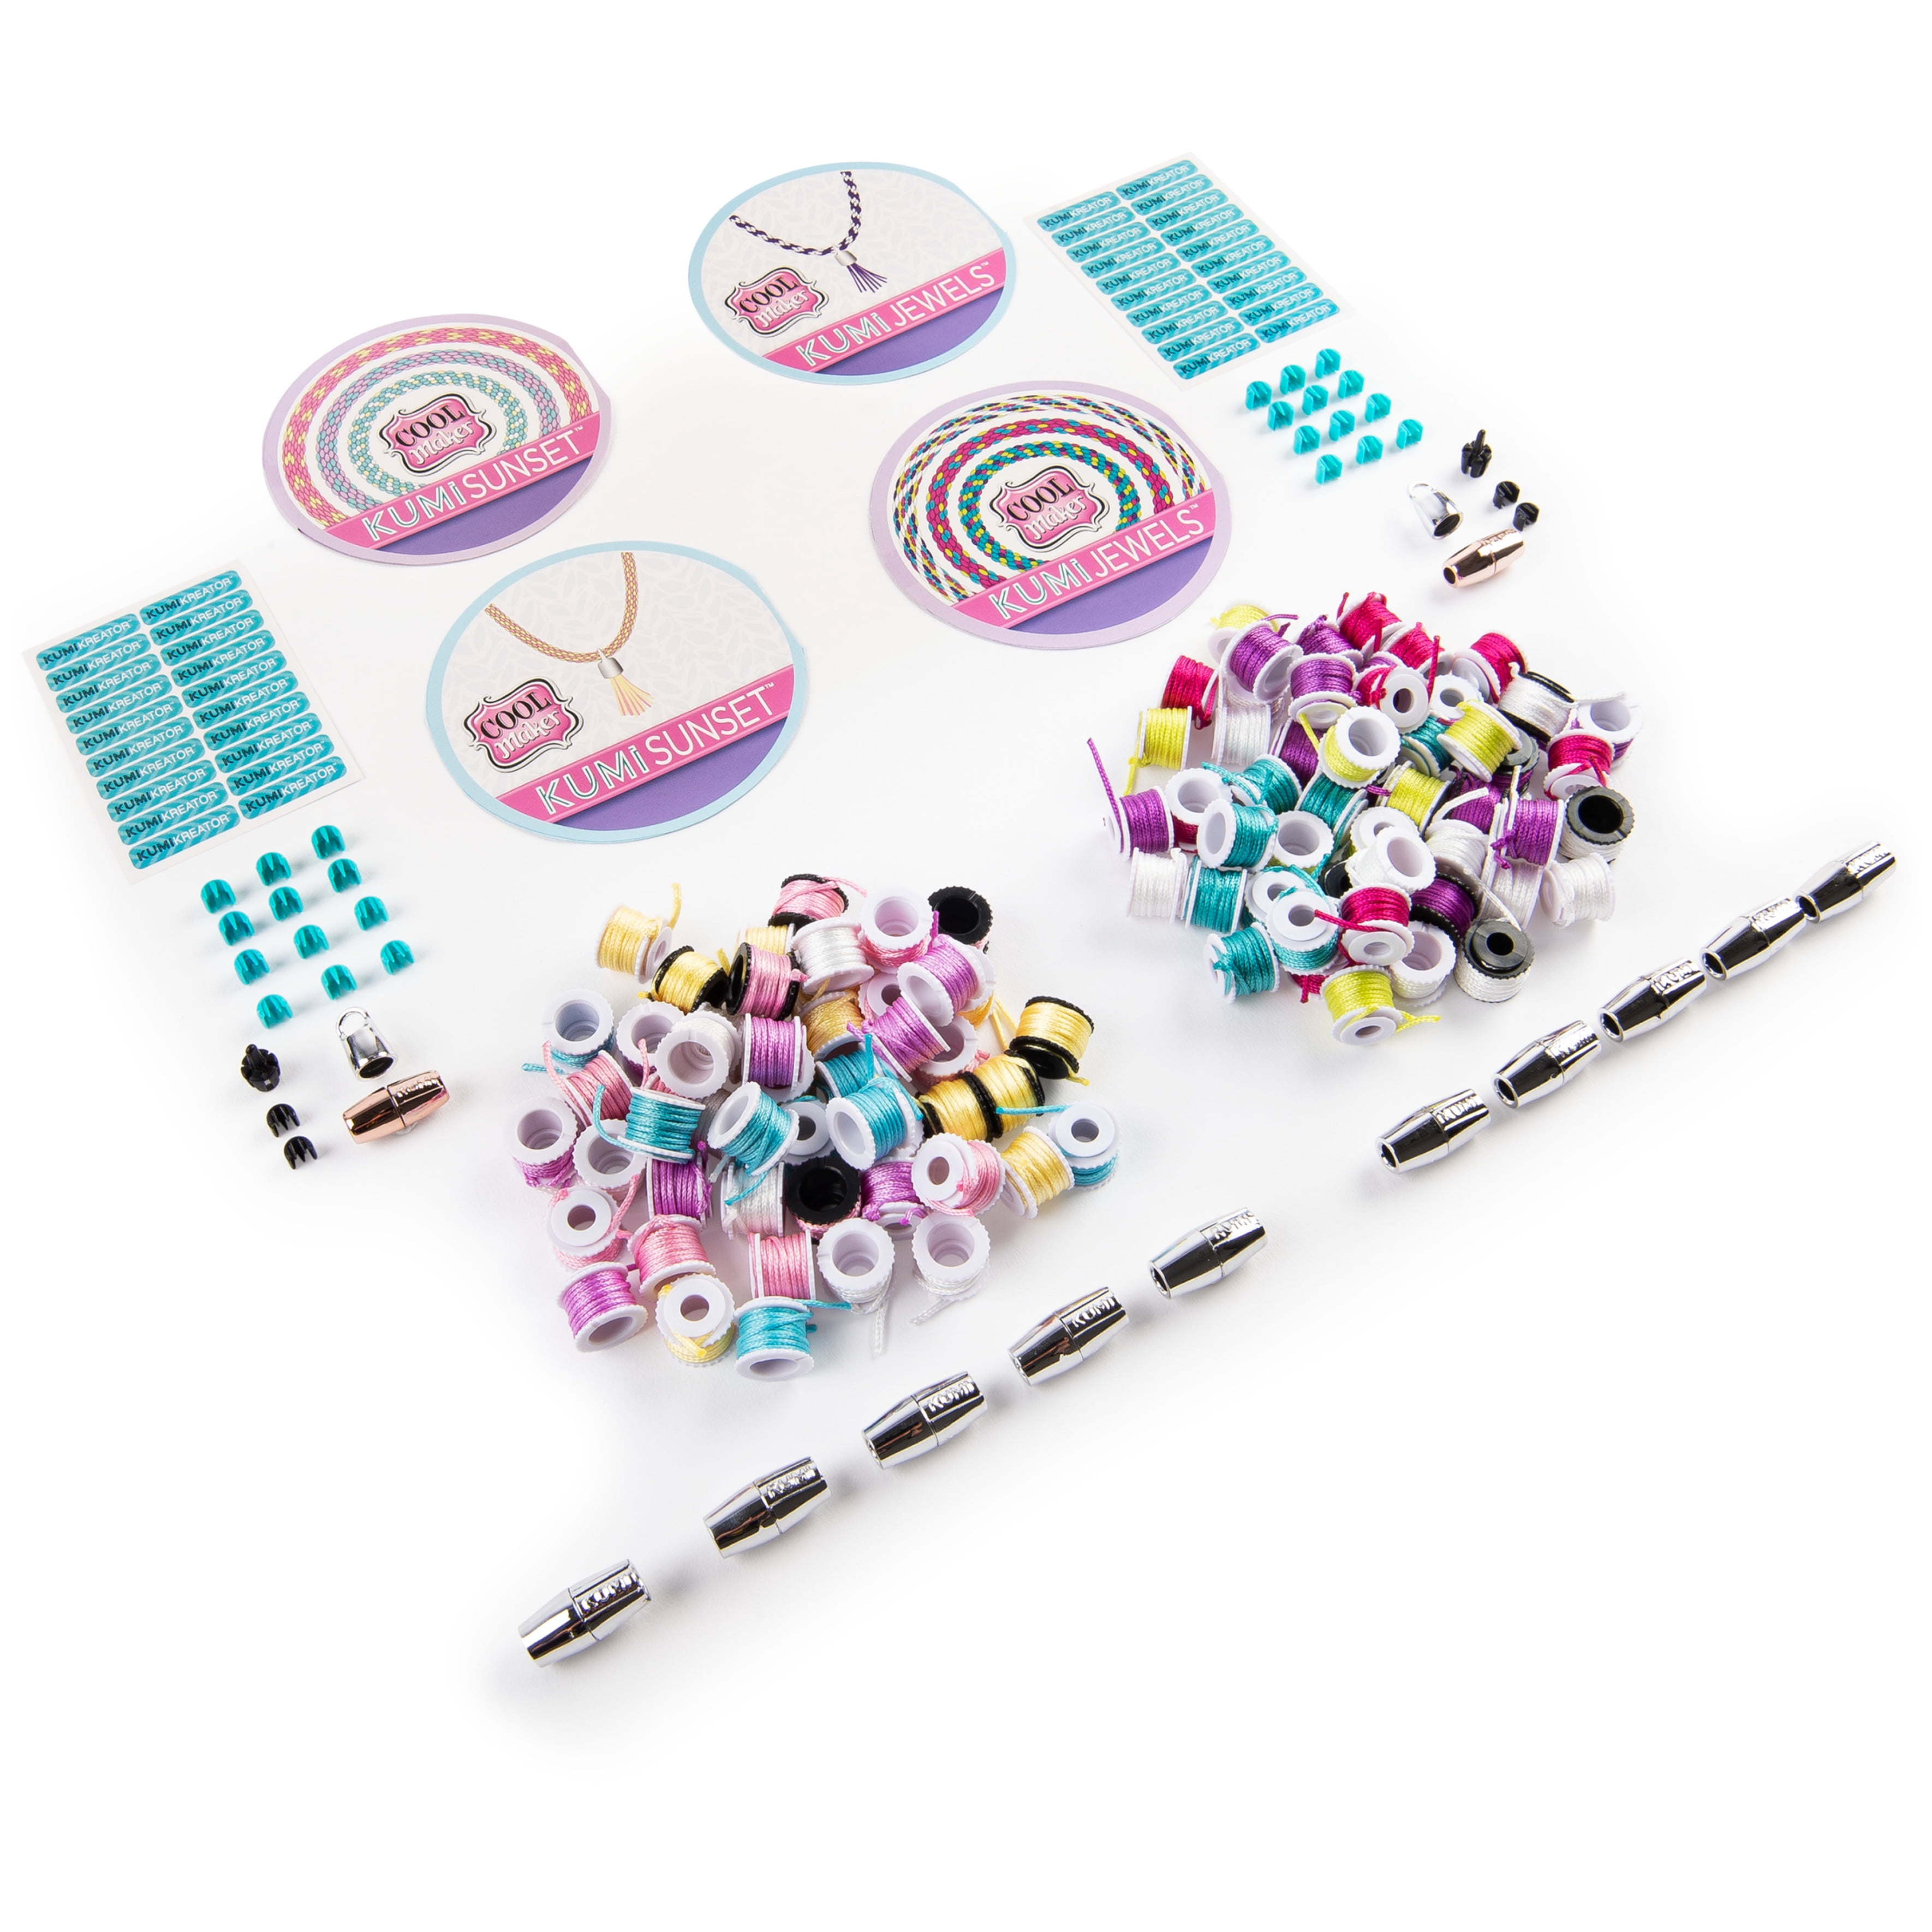 Creatorverse on Instagram: How totally cool is @regislandmx and her new  PopStyle Bracelet Maker kit?! 💖 #CoolMaker #Crafty #MakerMonday